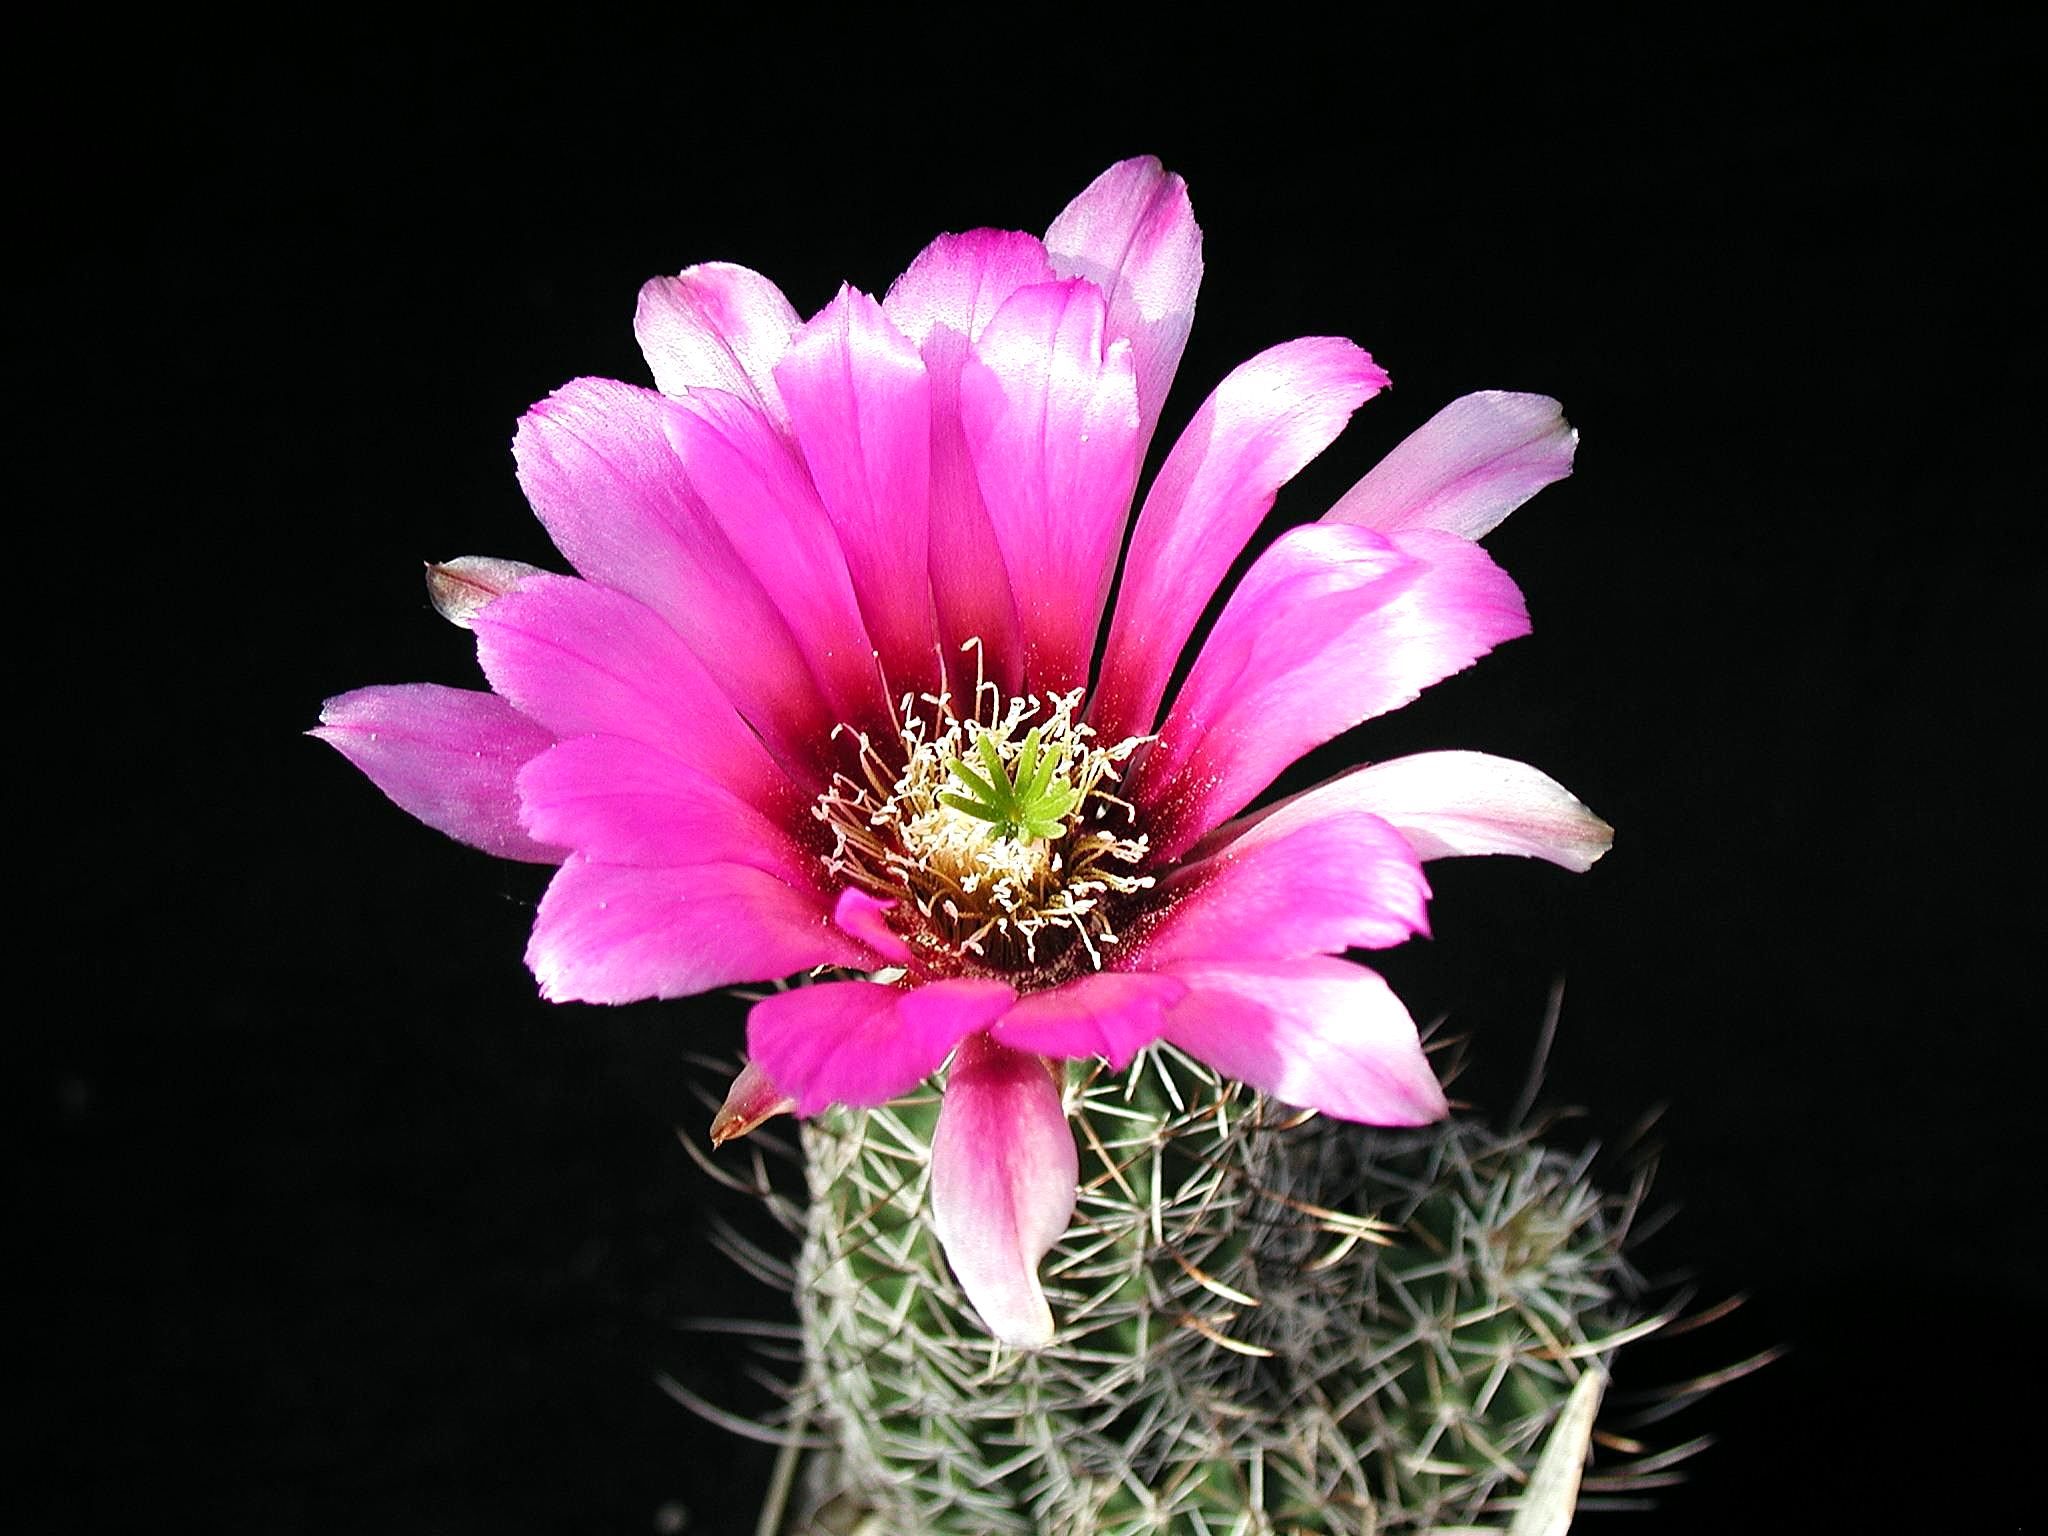 Cactus detailed image